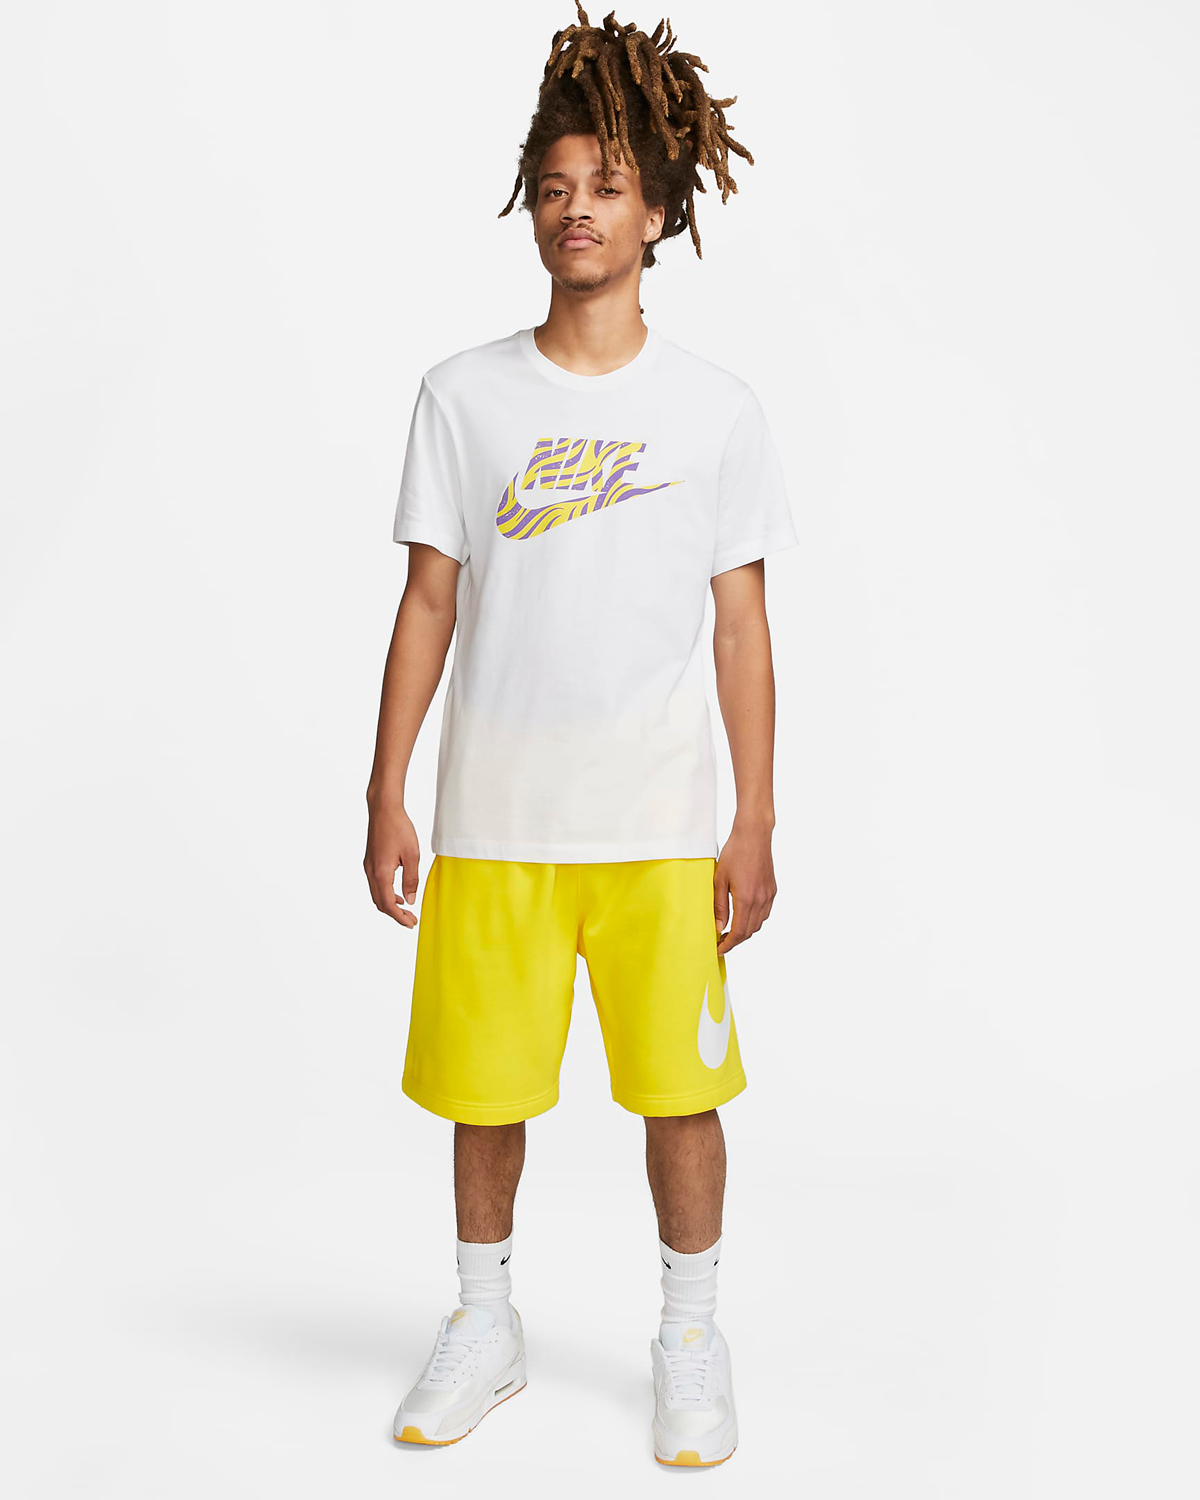 Nike-Opti-Yellow-Clothing